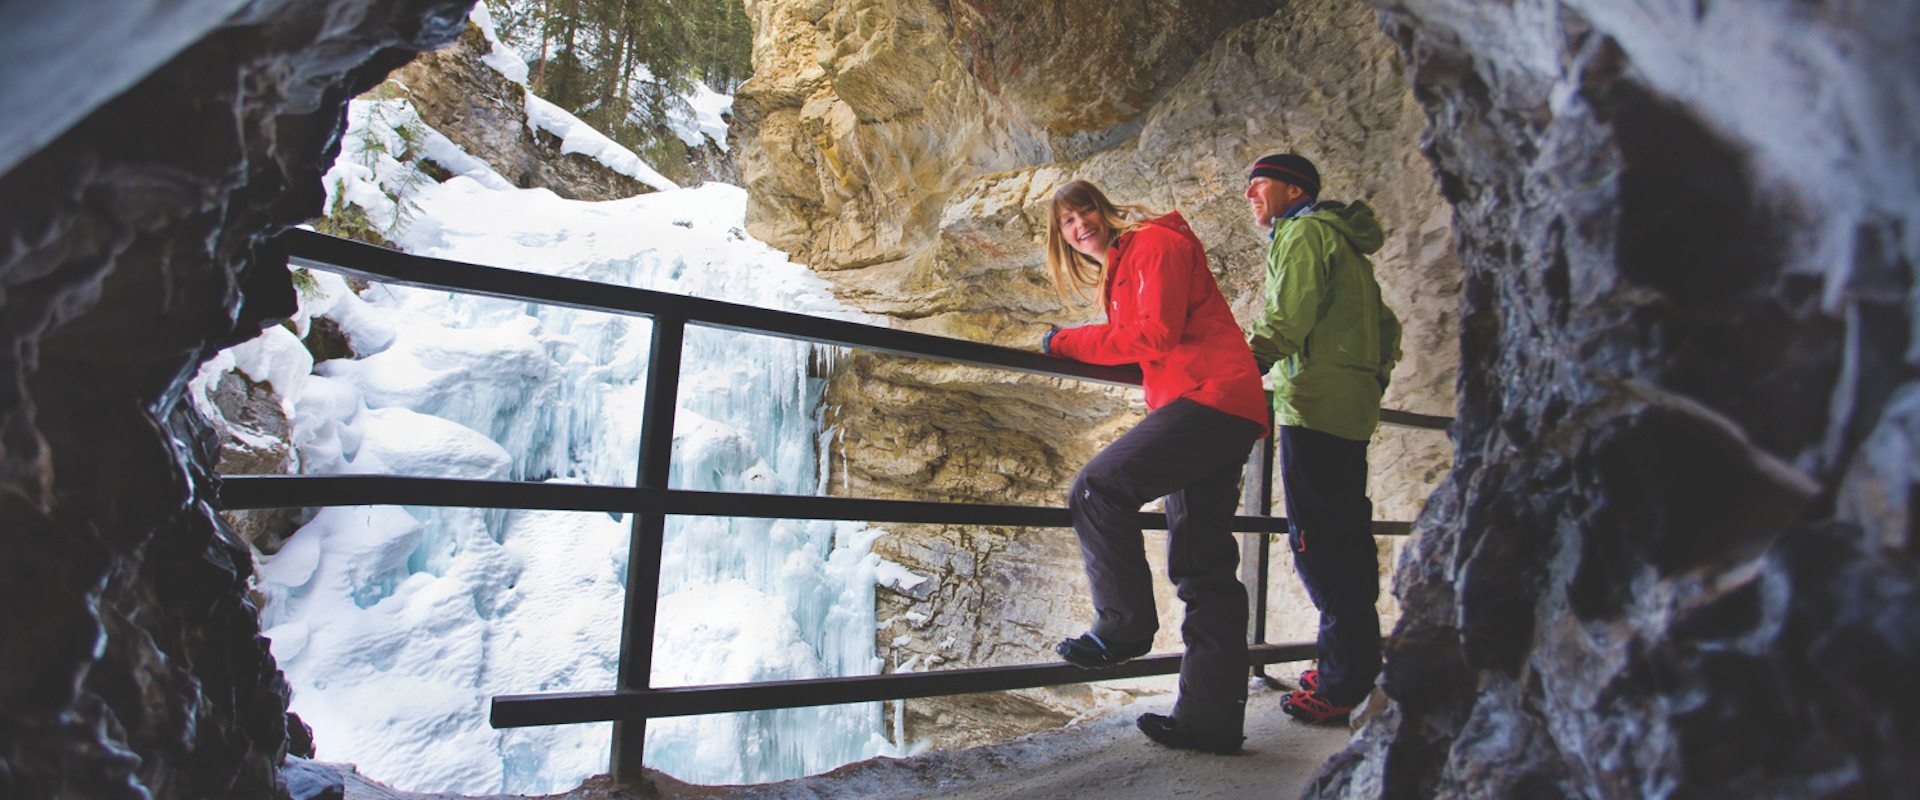 Maak een icewalk in de Johnston Canyon in Banff National Park